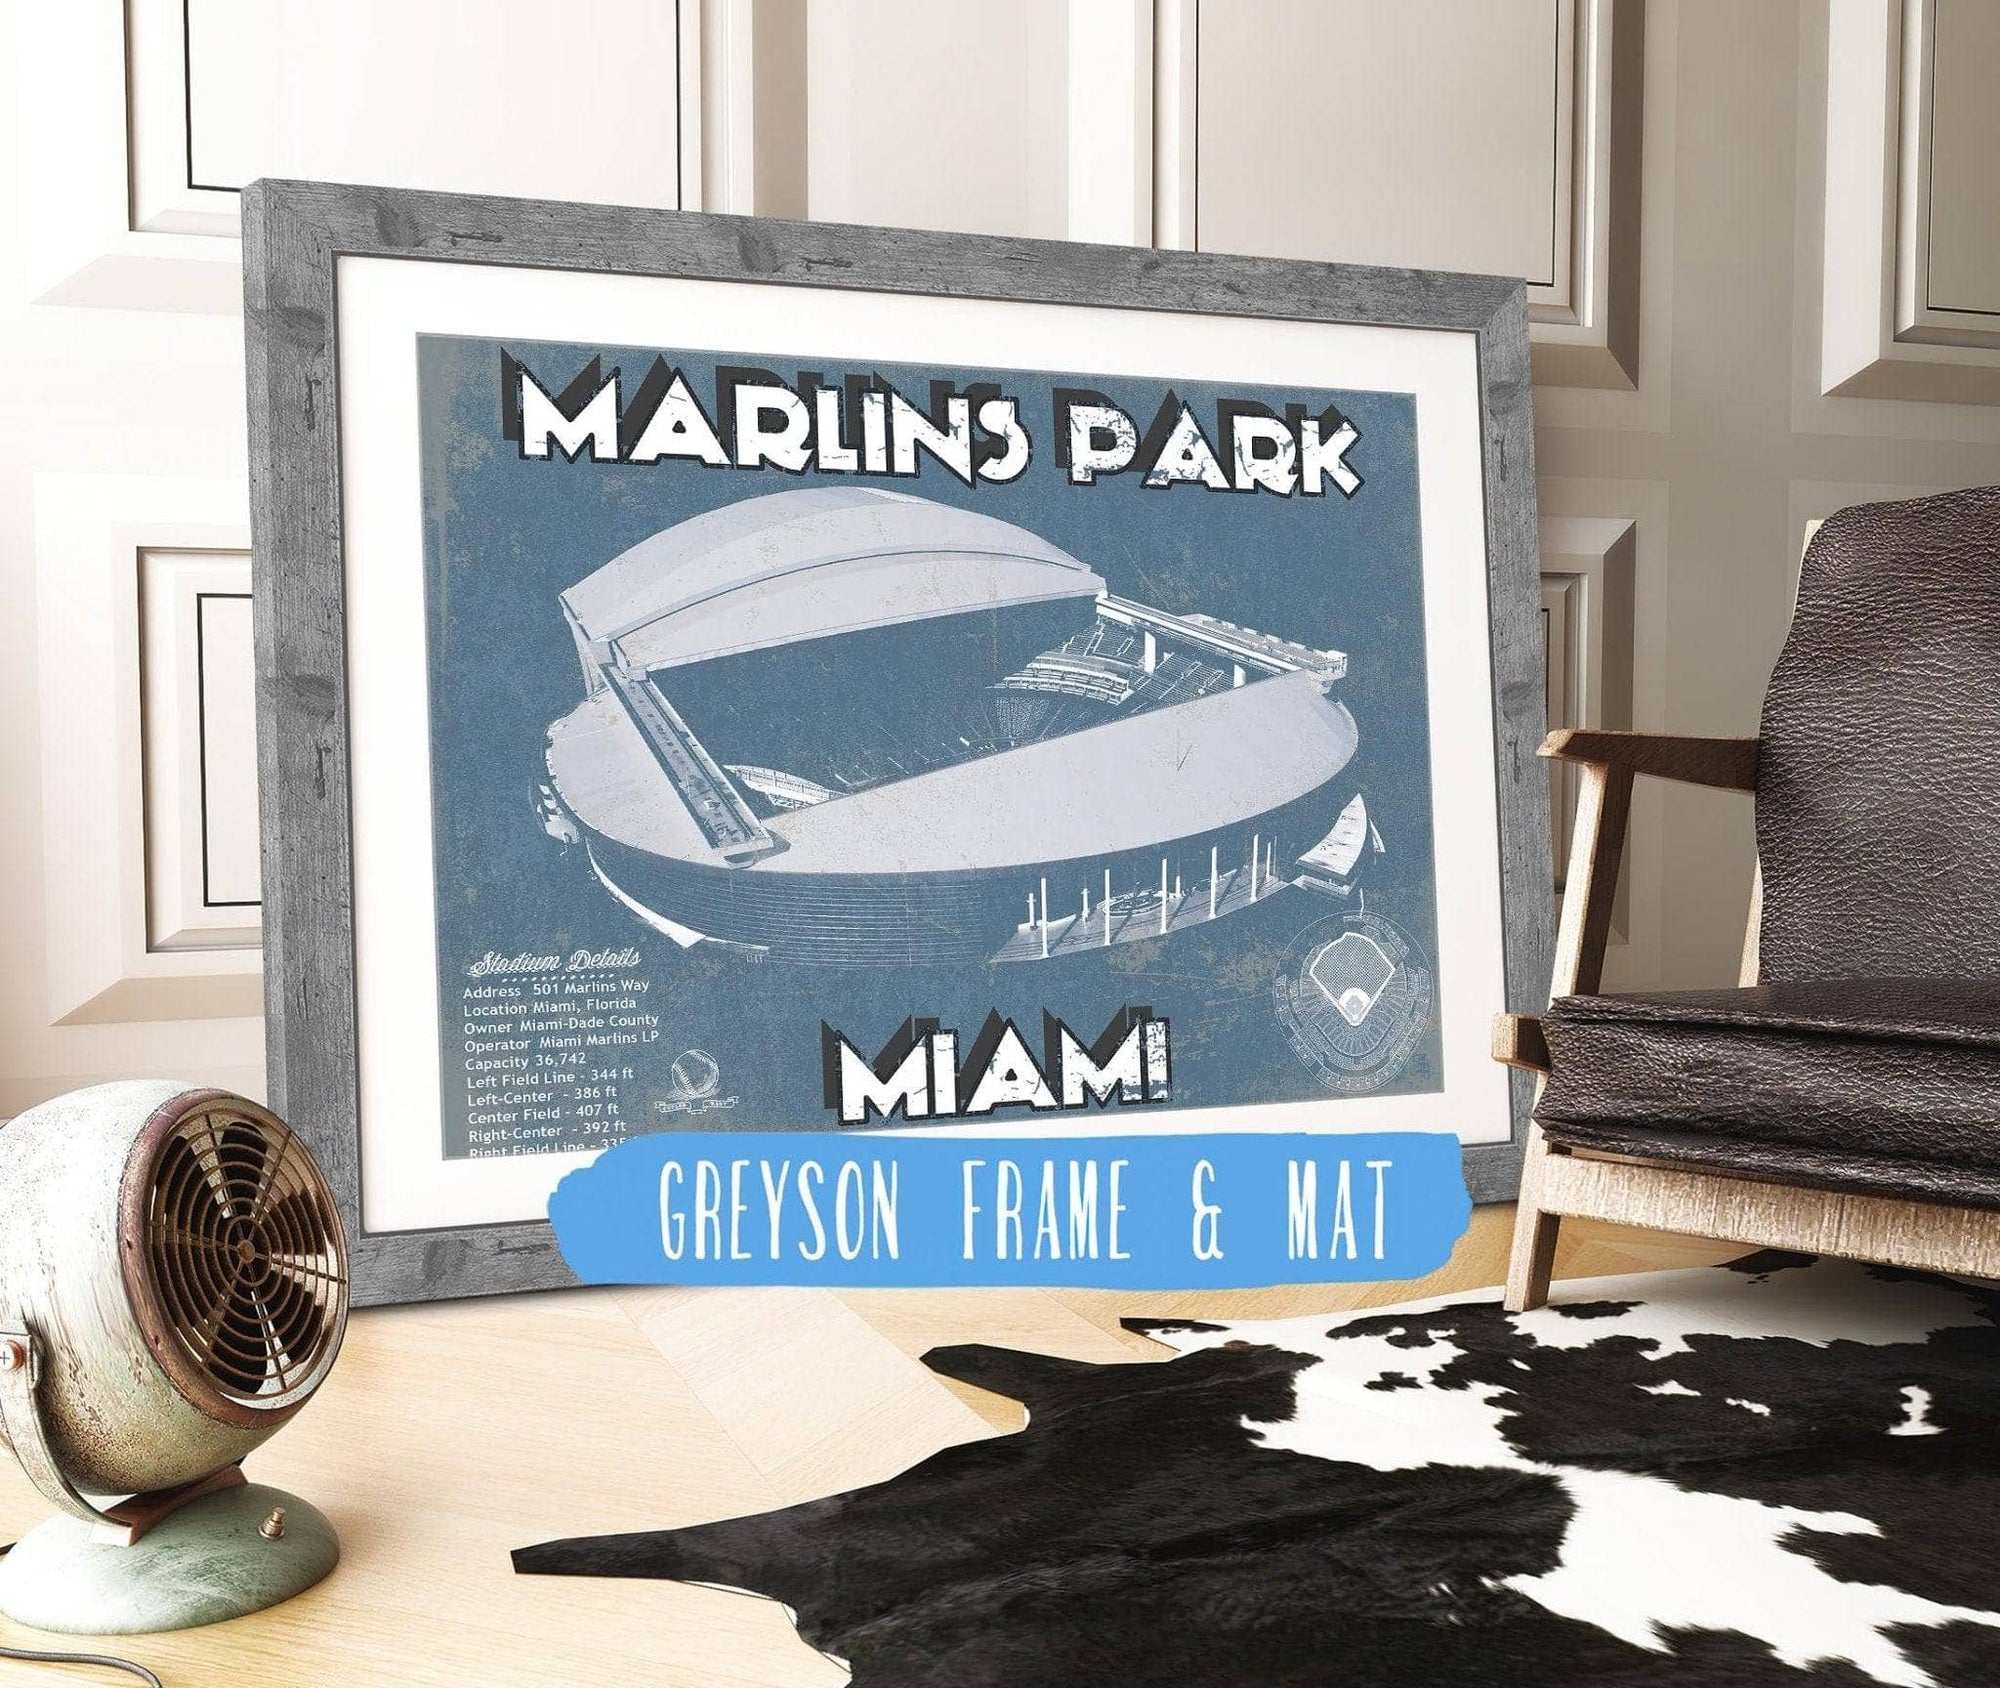 Cutler West Baseball Collection 14" x 11" / Greyson Frame & Mat Miami Marlins - Marlins Park Vintage Baseball Fan Print 718123457_73537